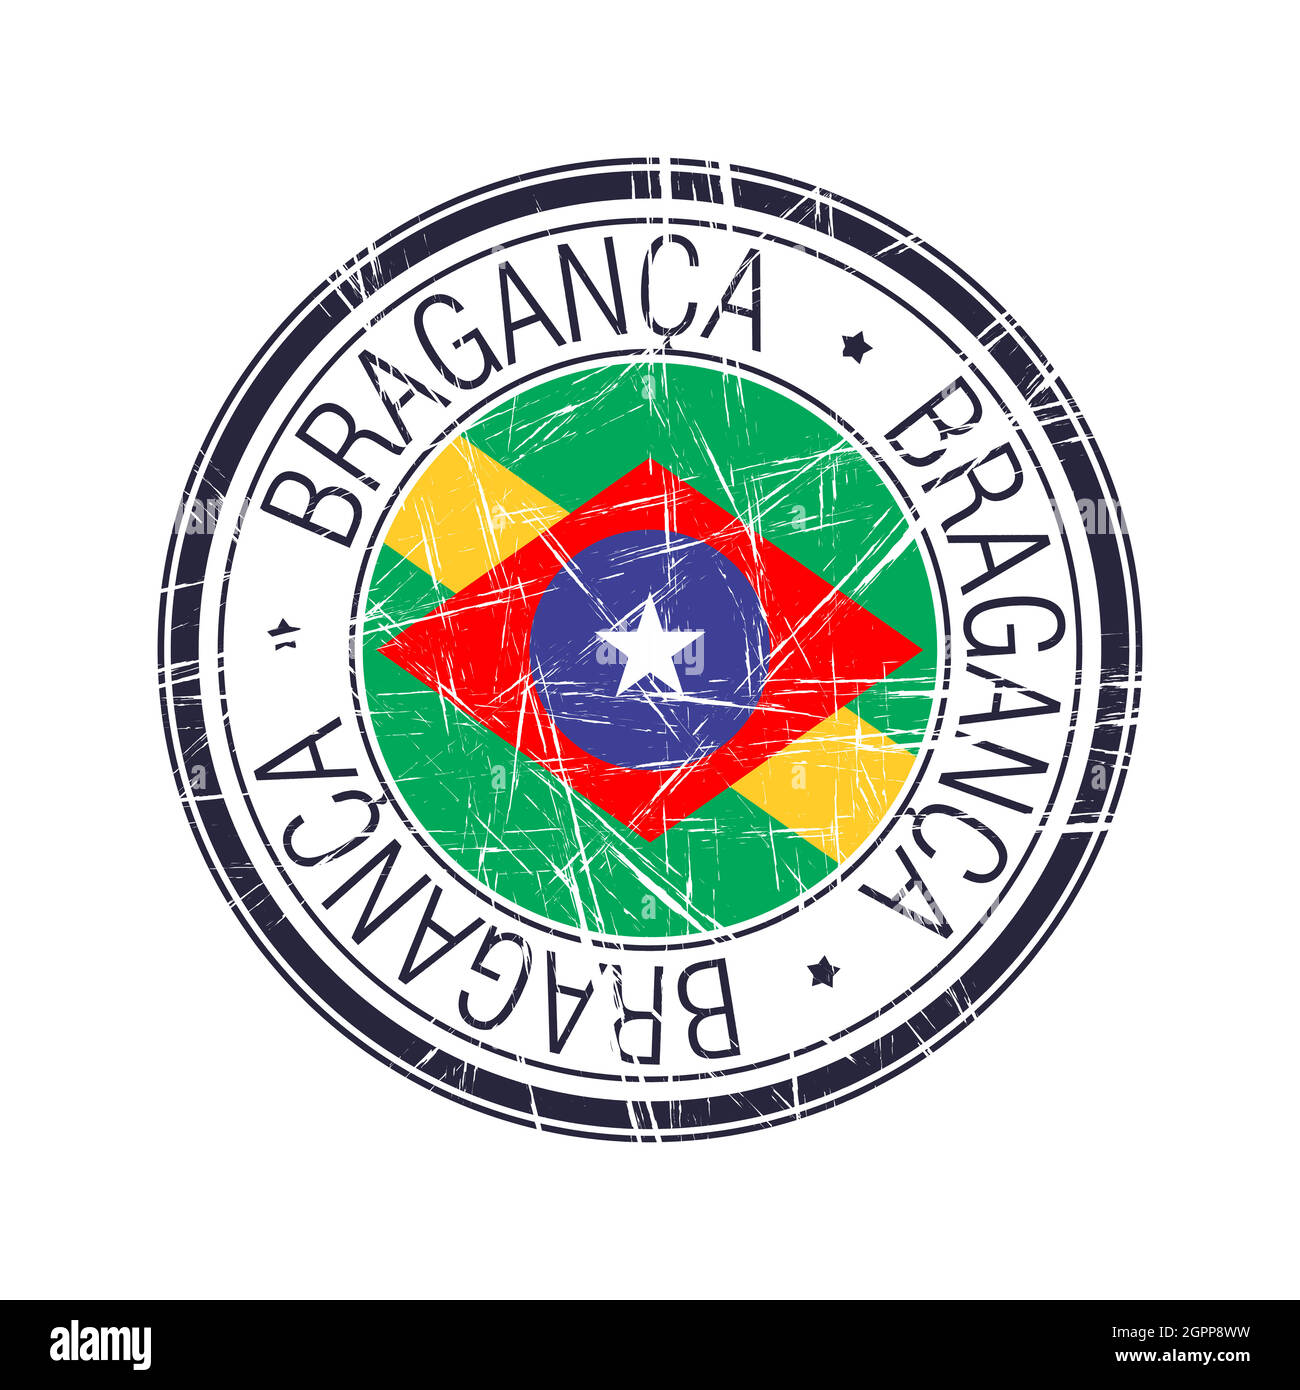 City of Braganca, Brazil vector stamp Stock Vector